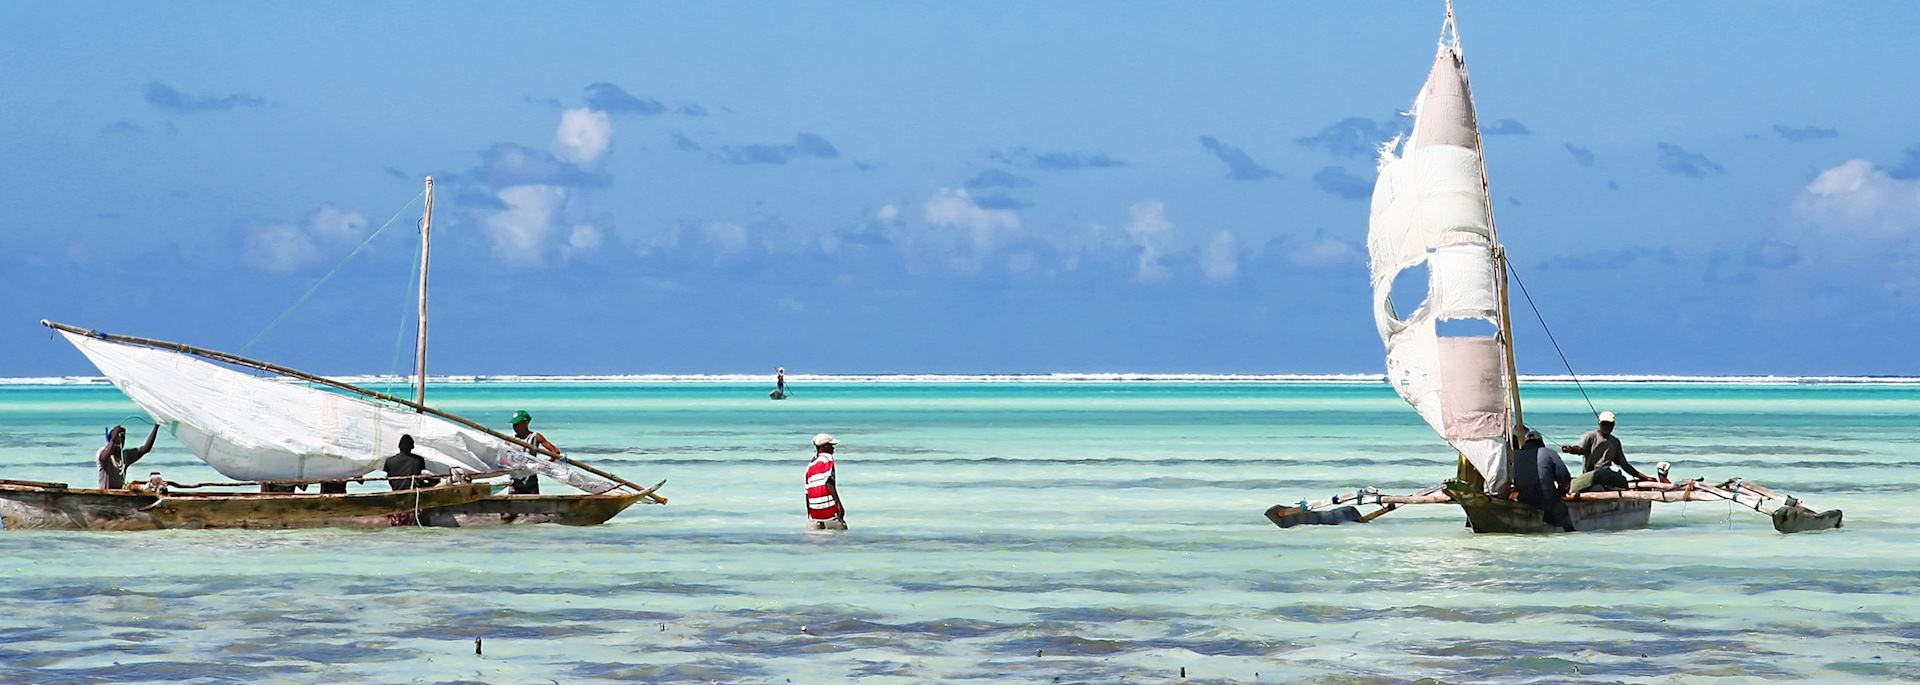 Fishing dhows in Zanzibar